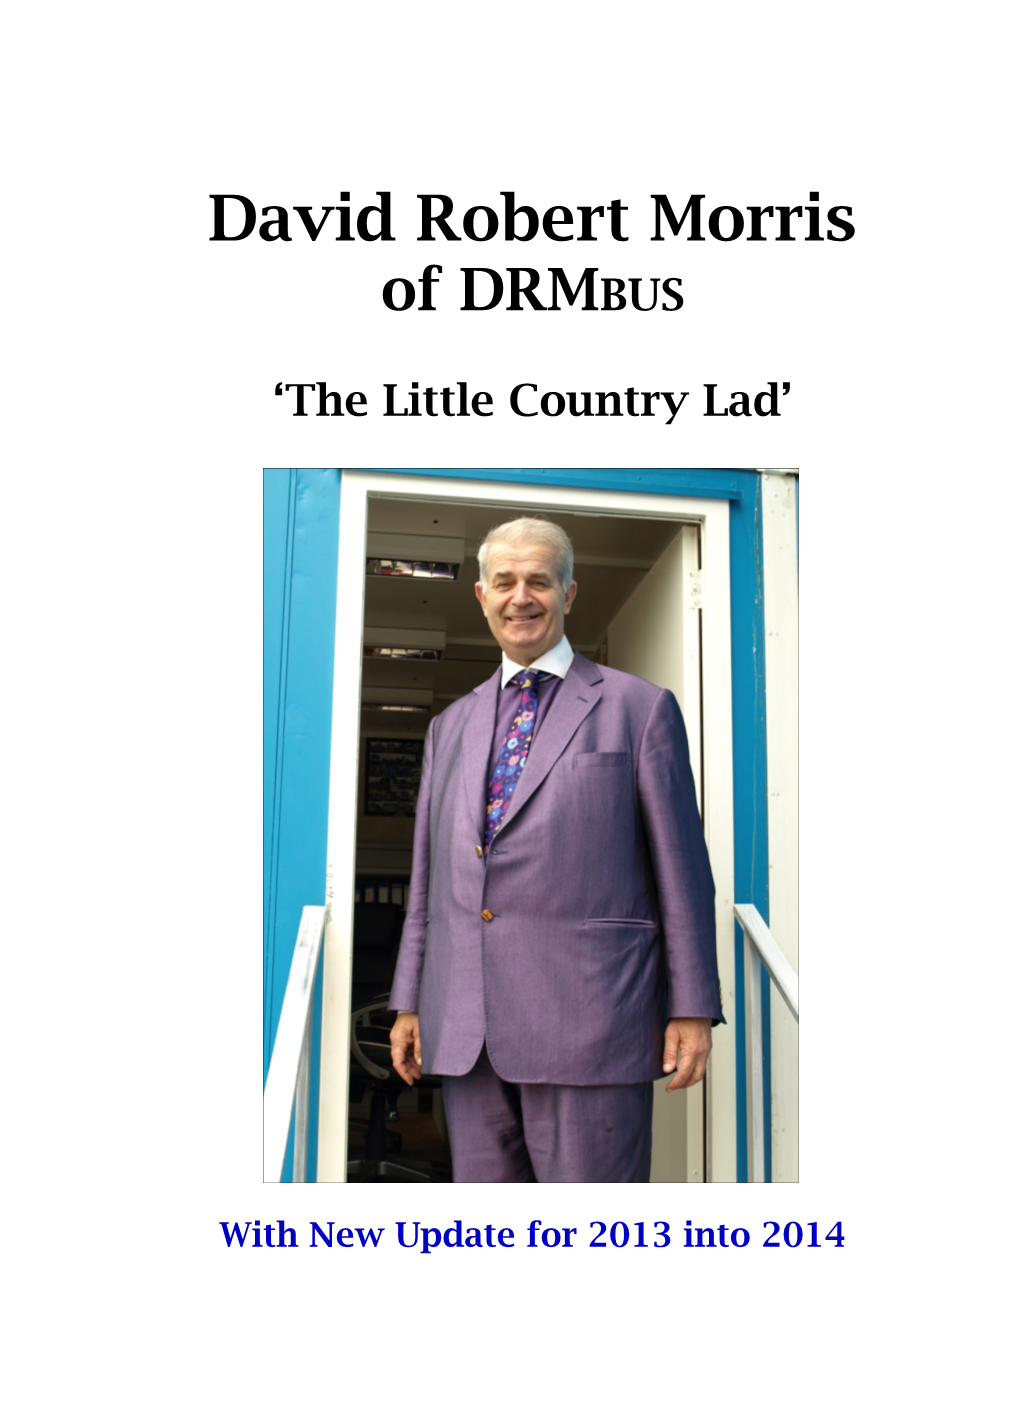 David Robert Morris DRMBUS Operates Regular Services in the Ledbury, Bromyard and Hereford Areas